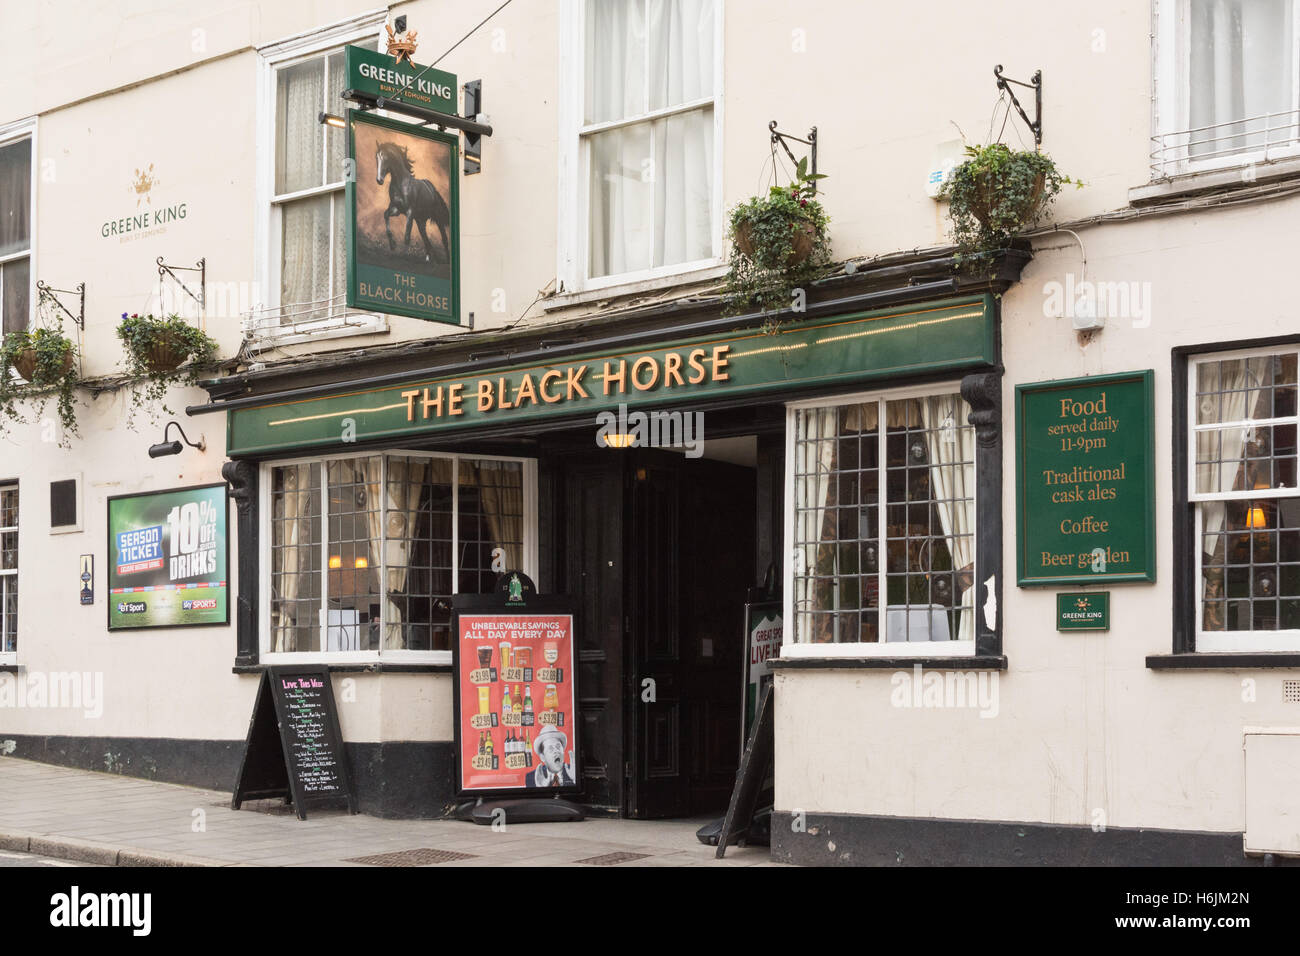 The Black Horse Greene King public house, Exeter, Devon, England, UK Stock Photo